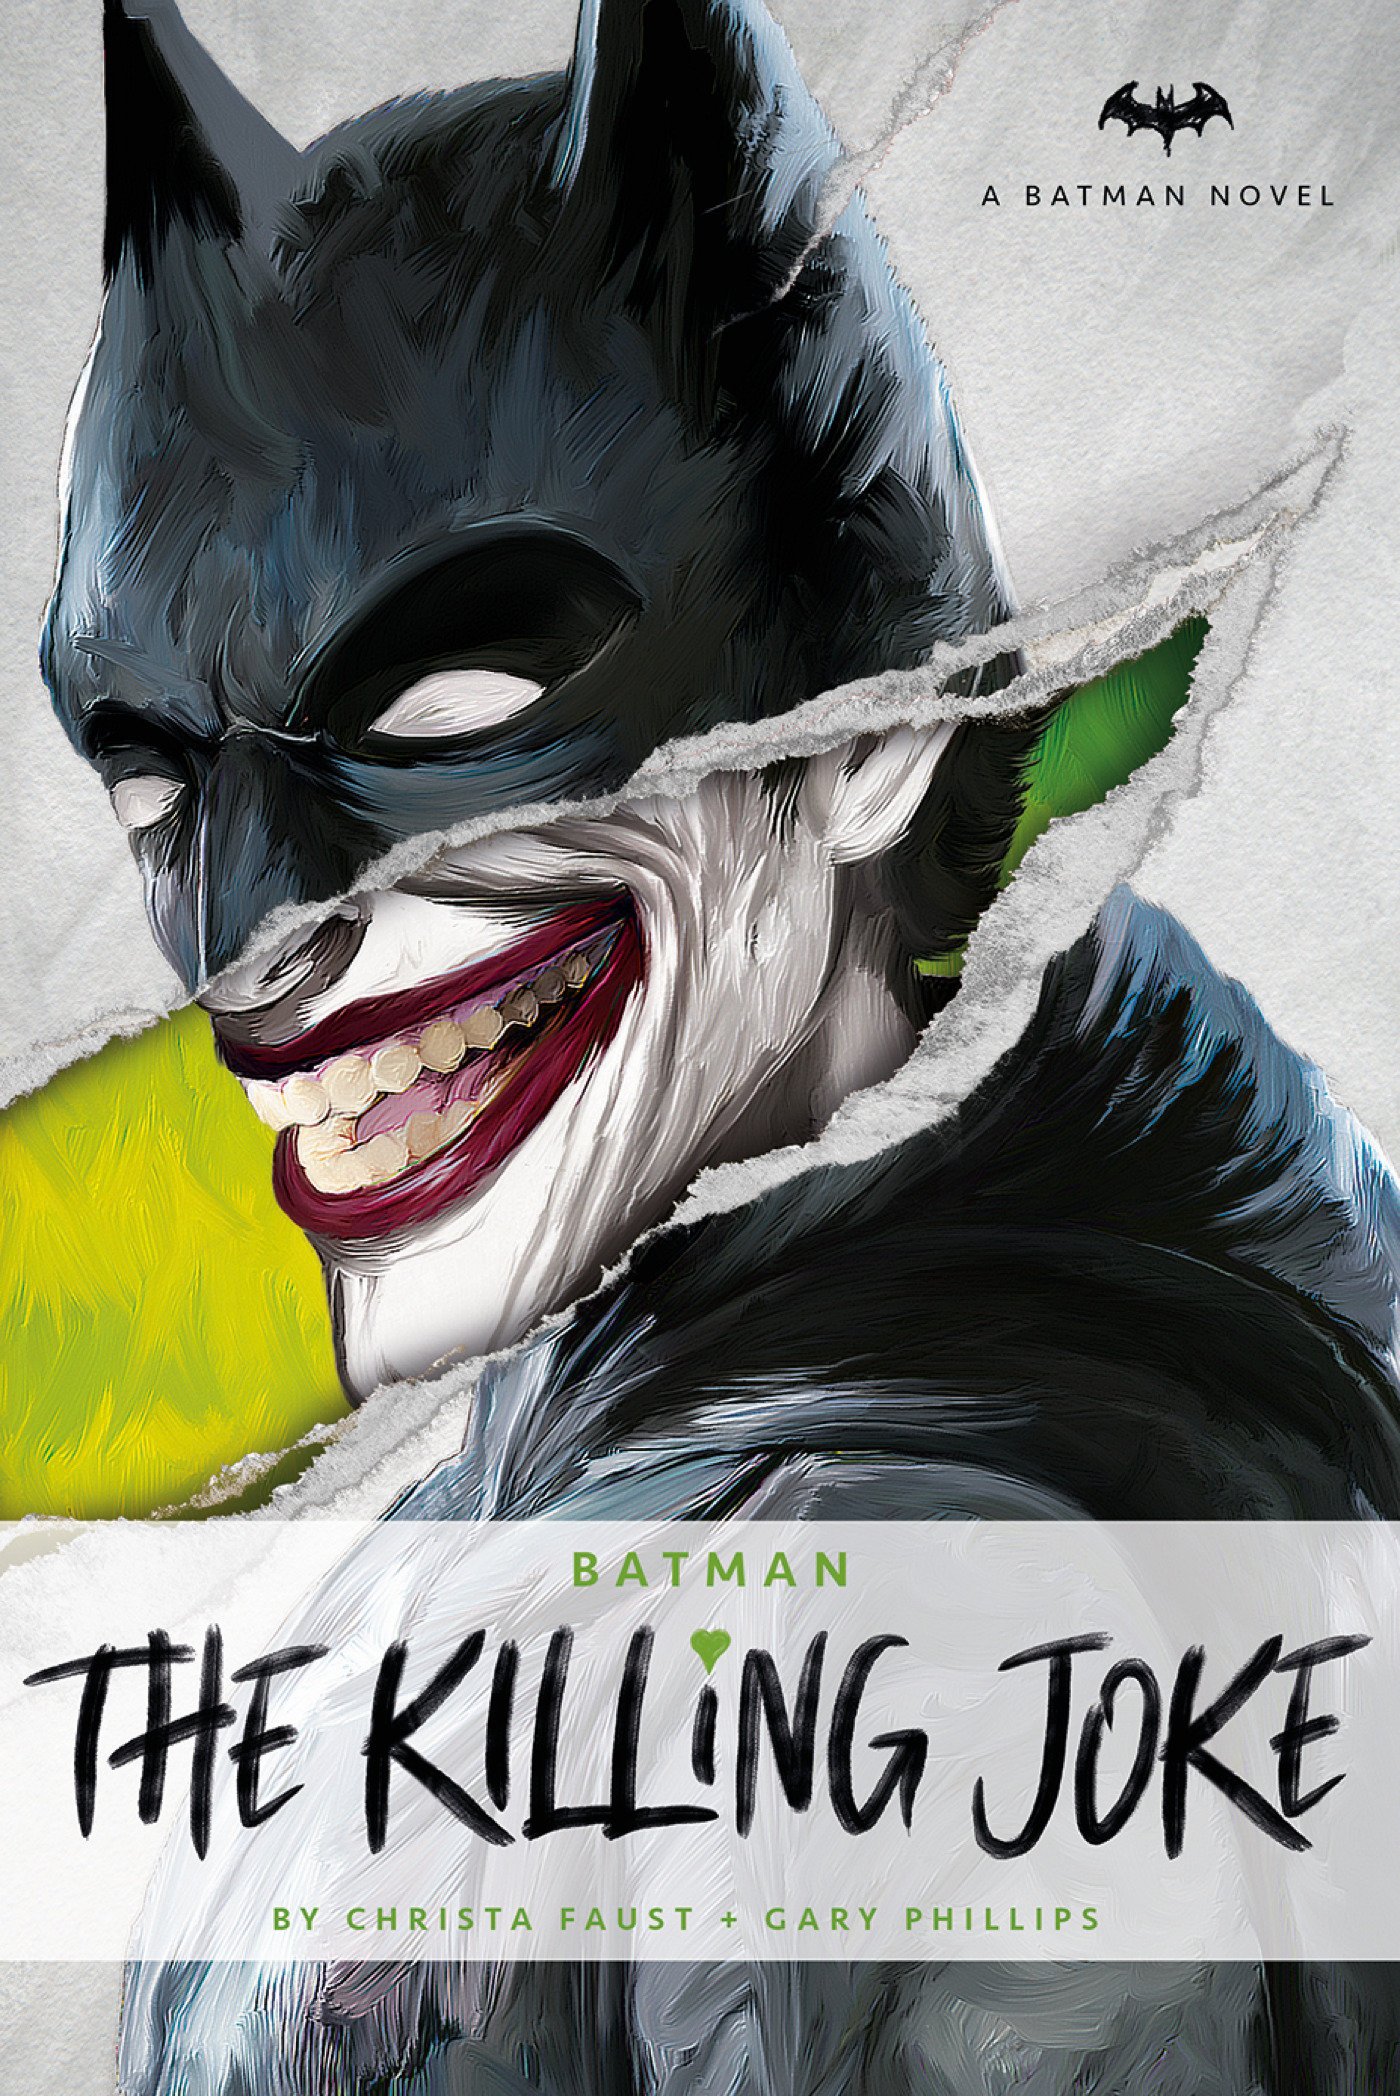 Mua DC Comics novels - Batman: The Killing Joke trên Amazon Mỹ chính hãng  2023 | Fado